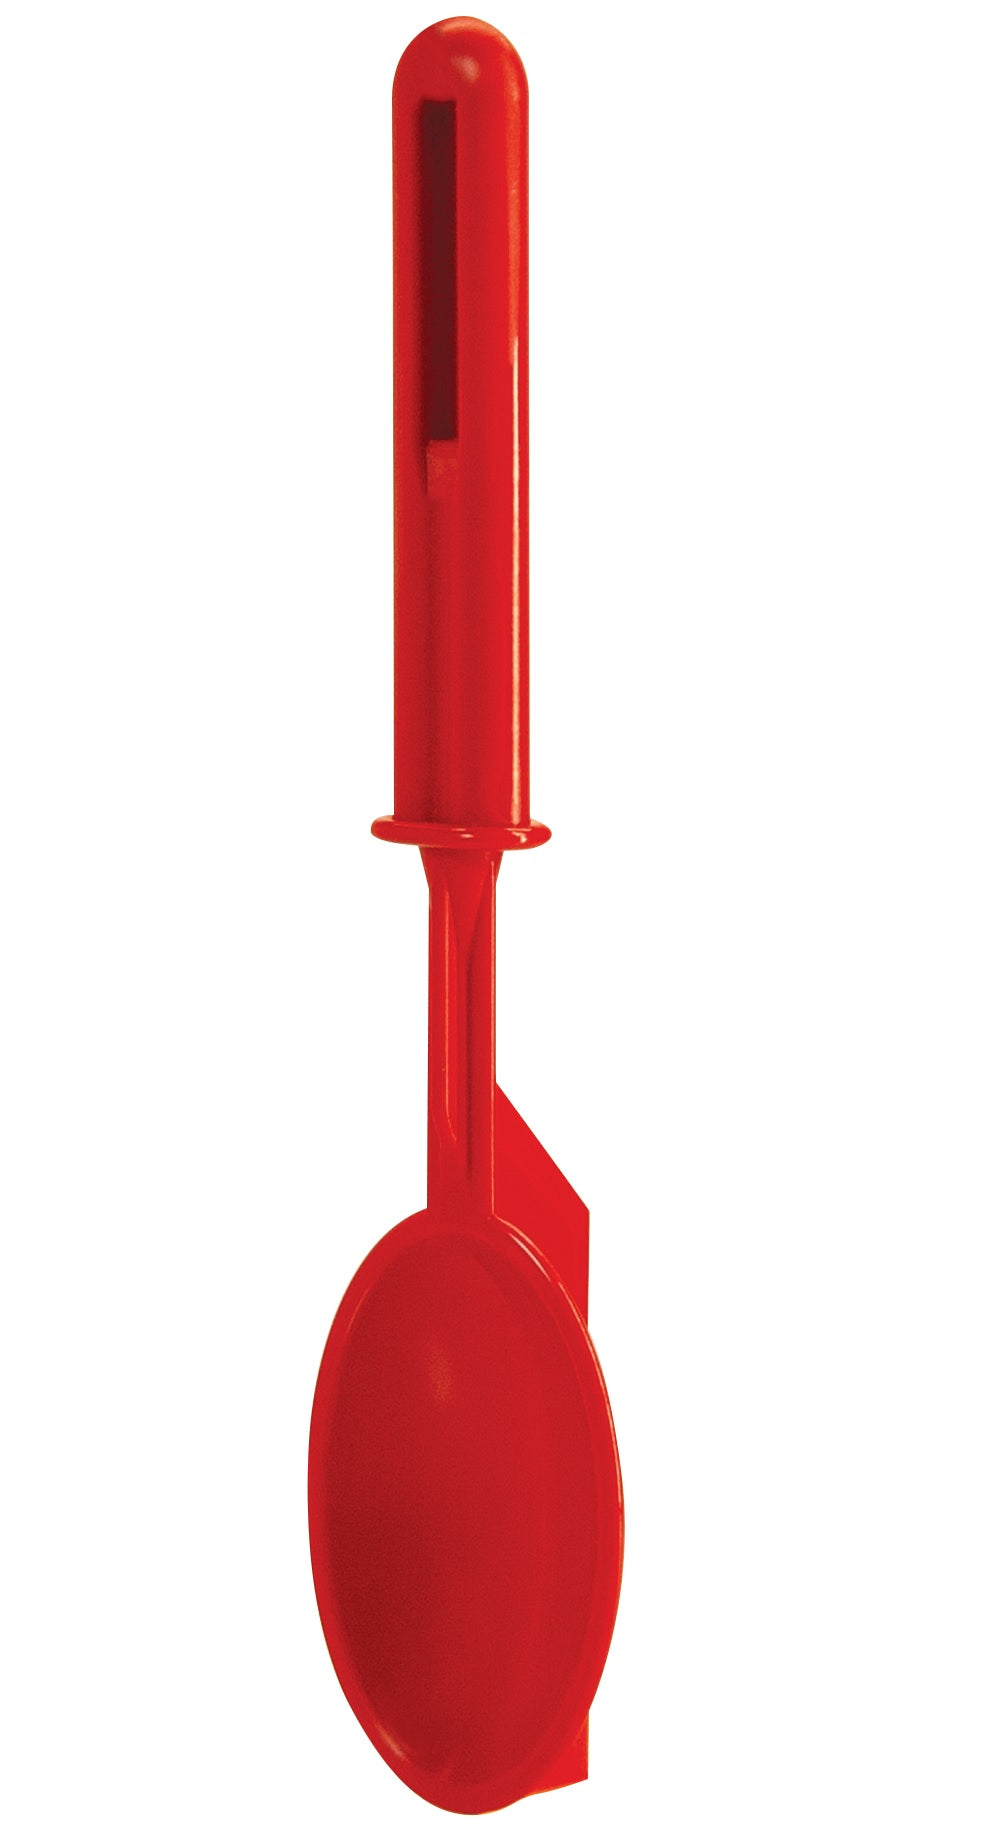 ChopWare 20612 Spoon Stir, Red